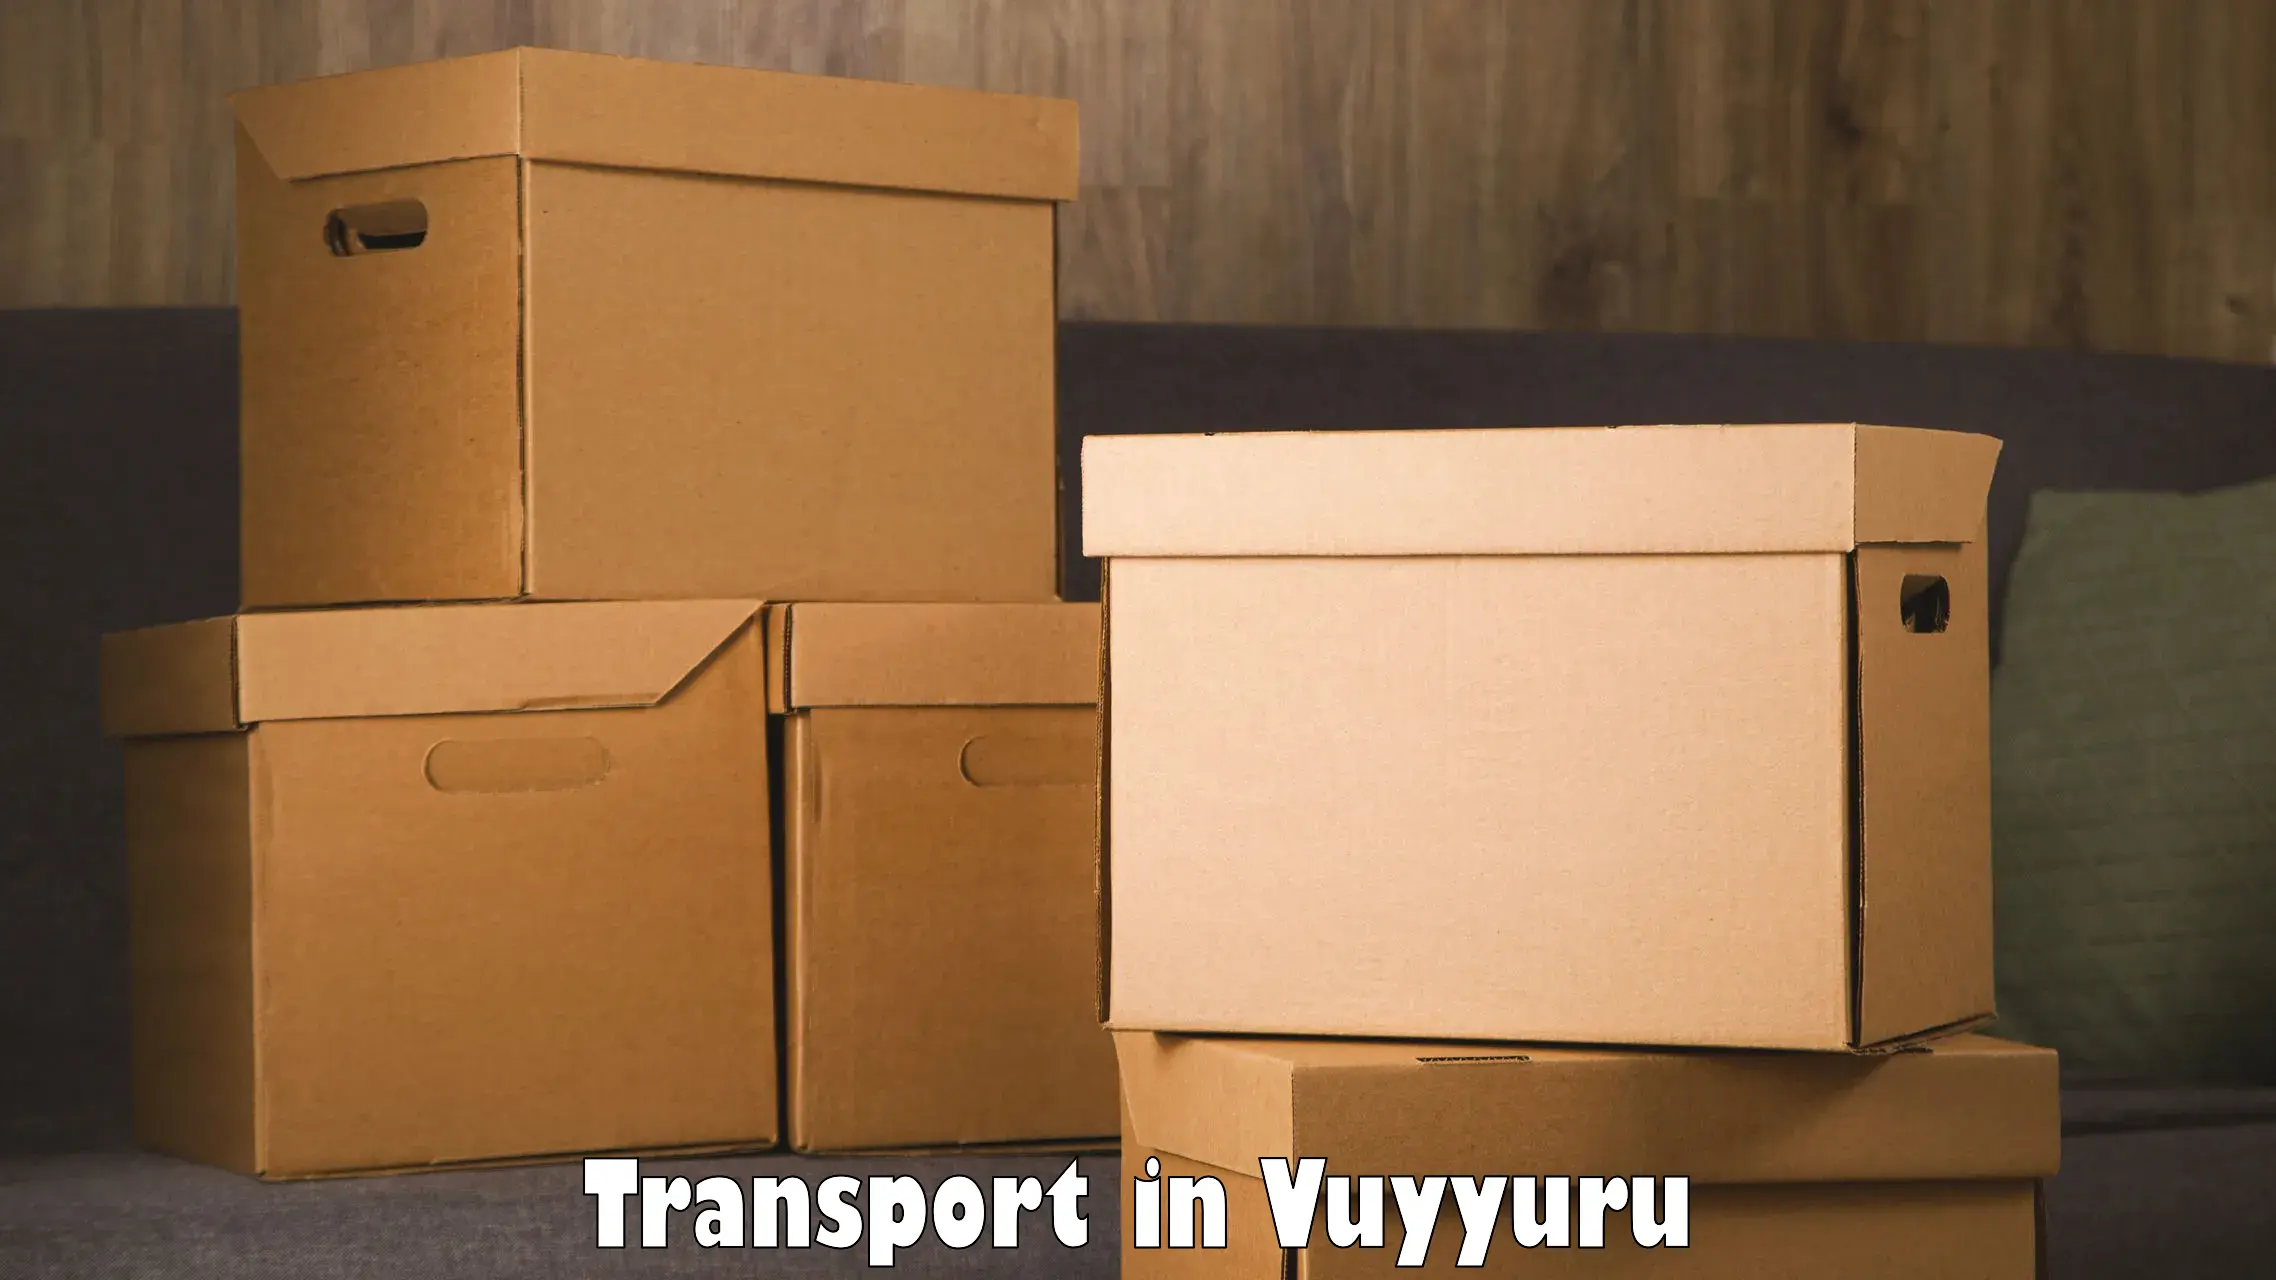 Air freight transport services in Vuyyuru